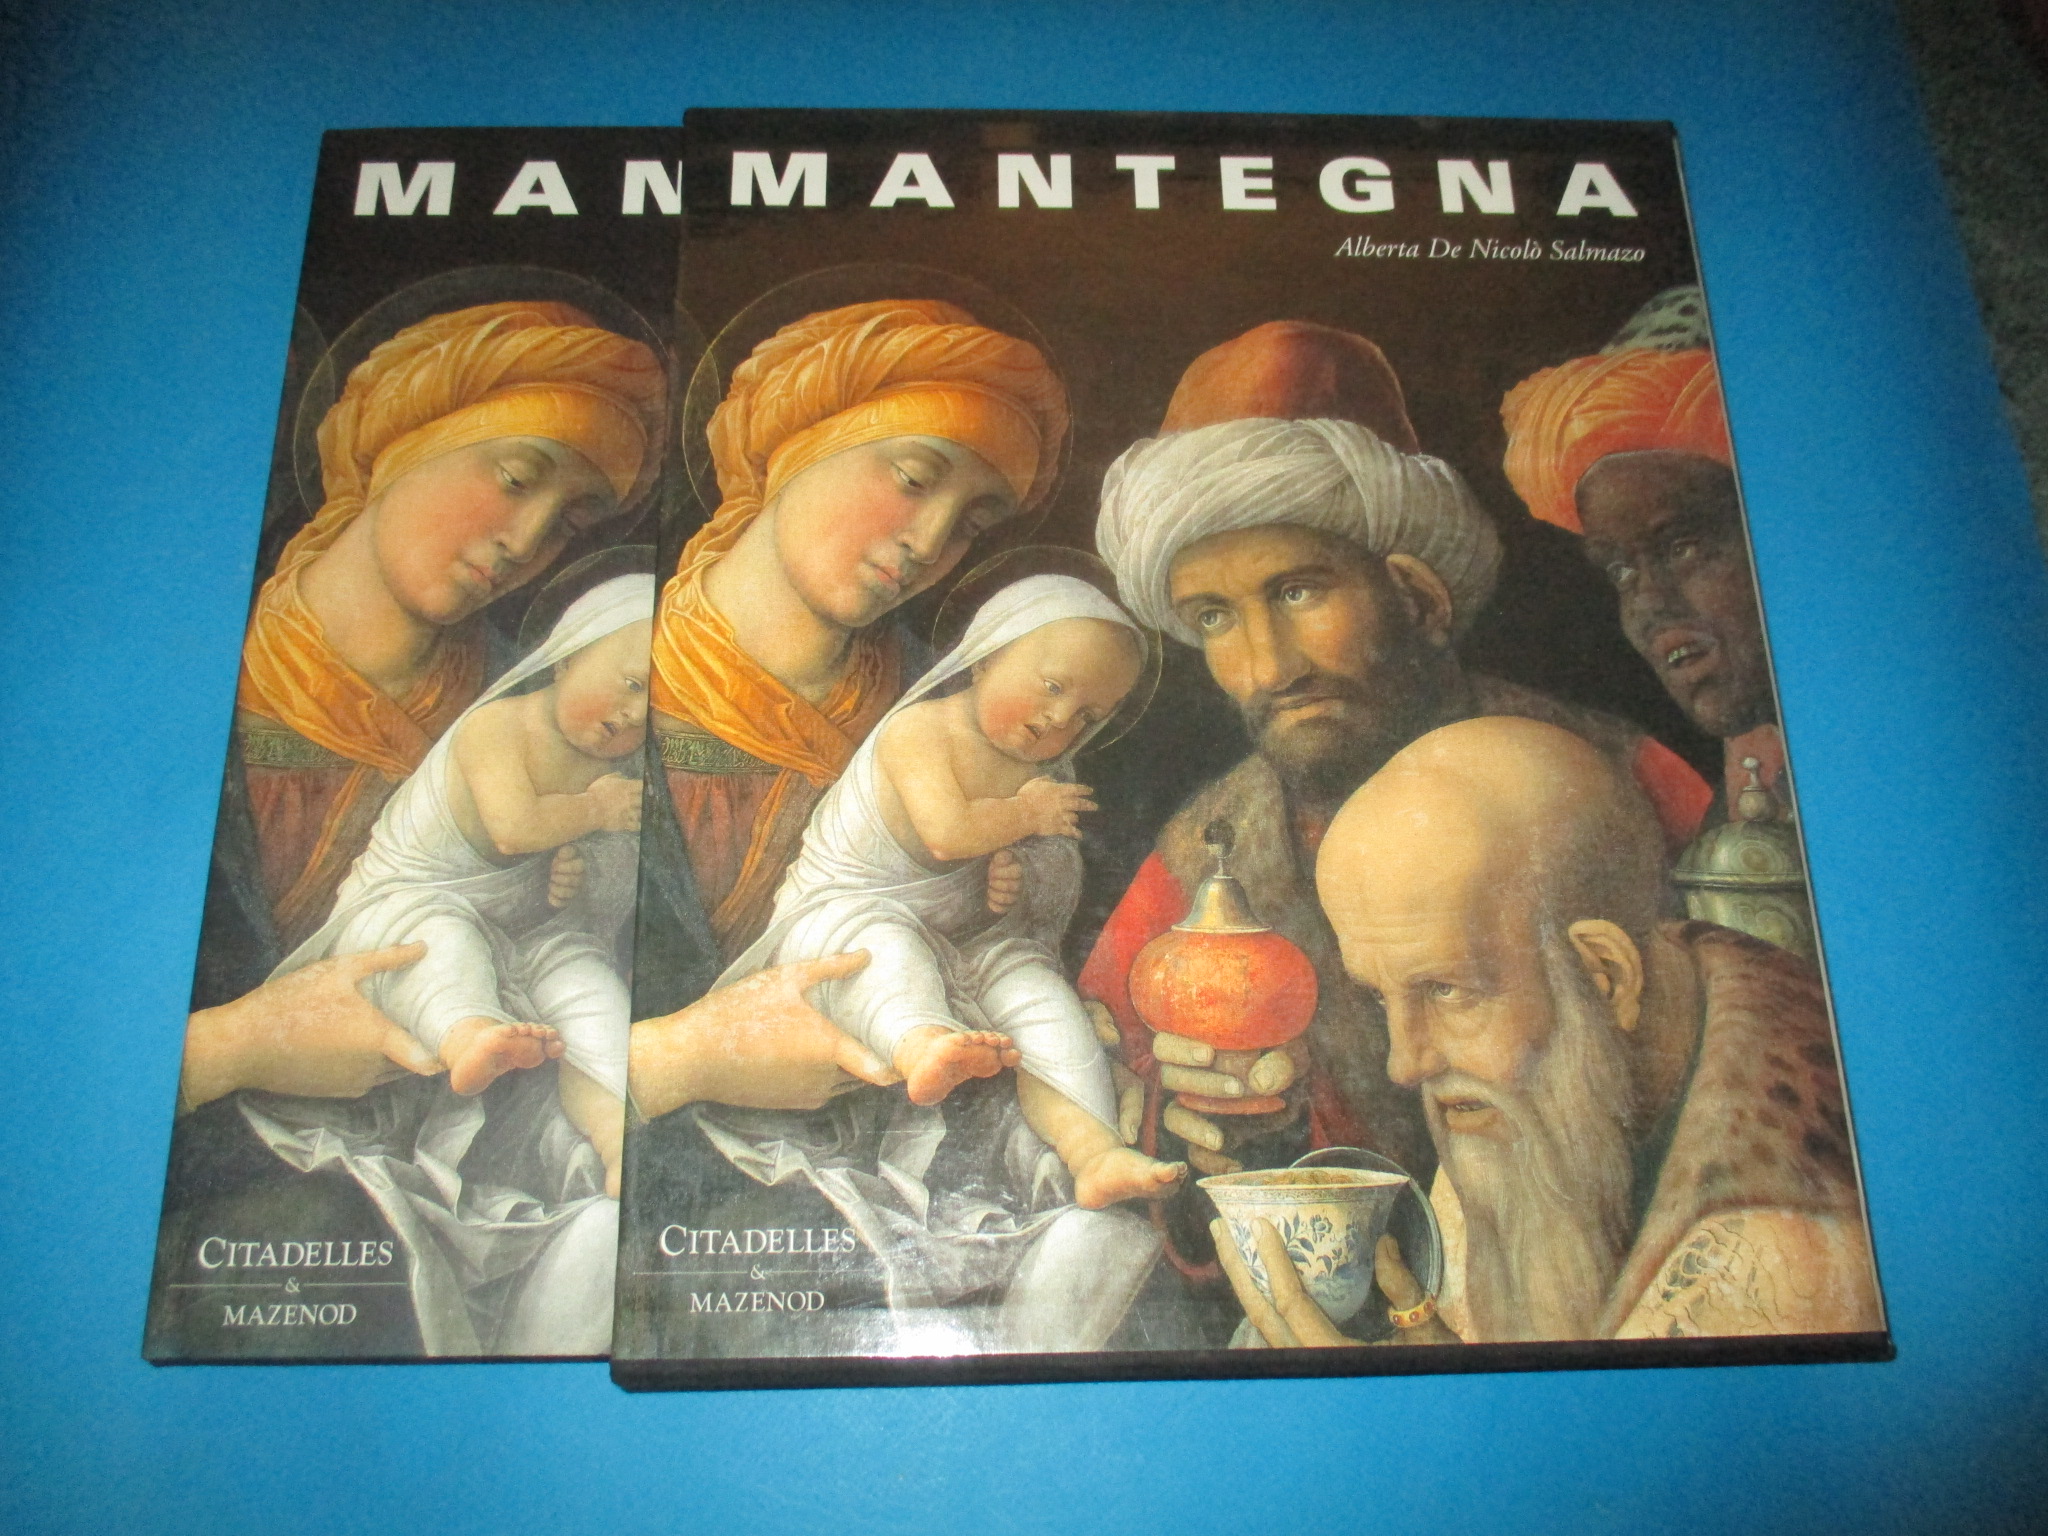 Mantegna, Alberta De Nicolo Salmaso, emboîtage, Citadelles & Mazenod